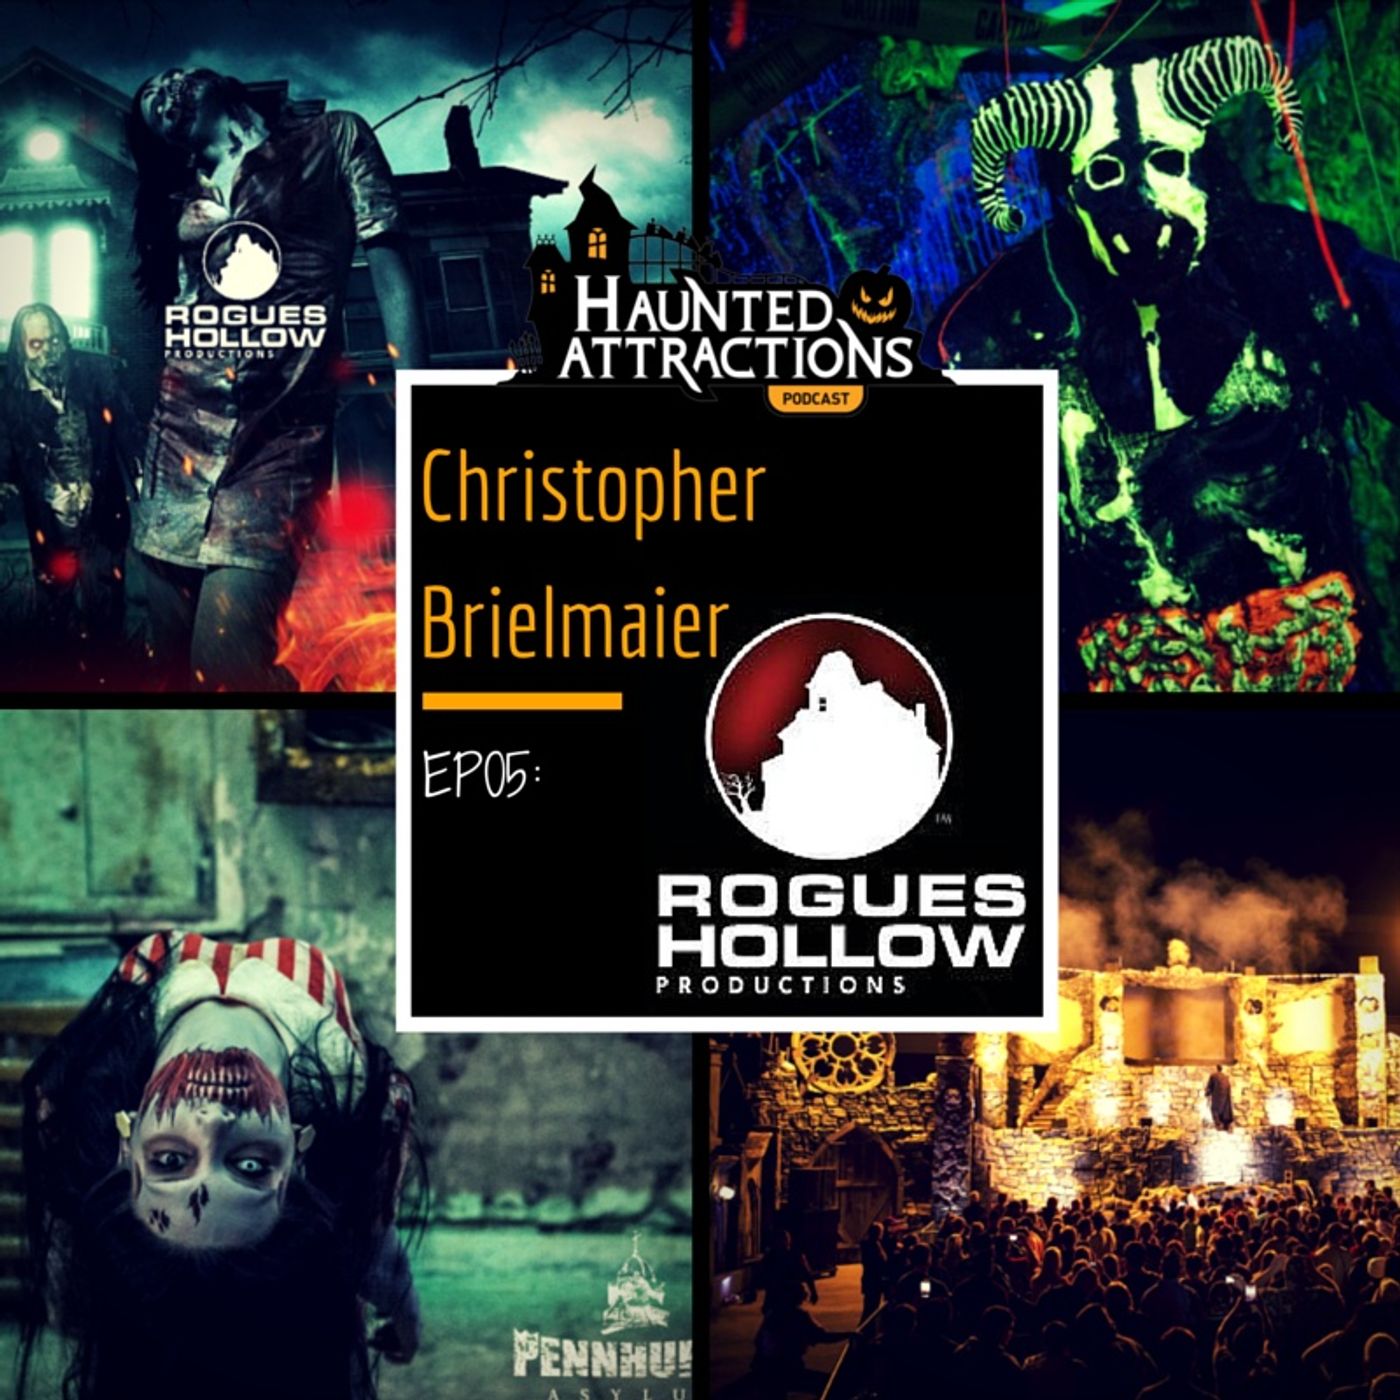 EP05: Rogues Hollow | Christopher Brielmaier | Haunted House Web Design Image